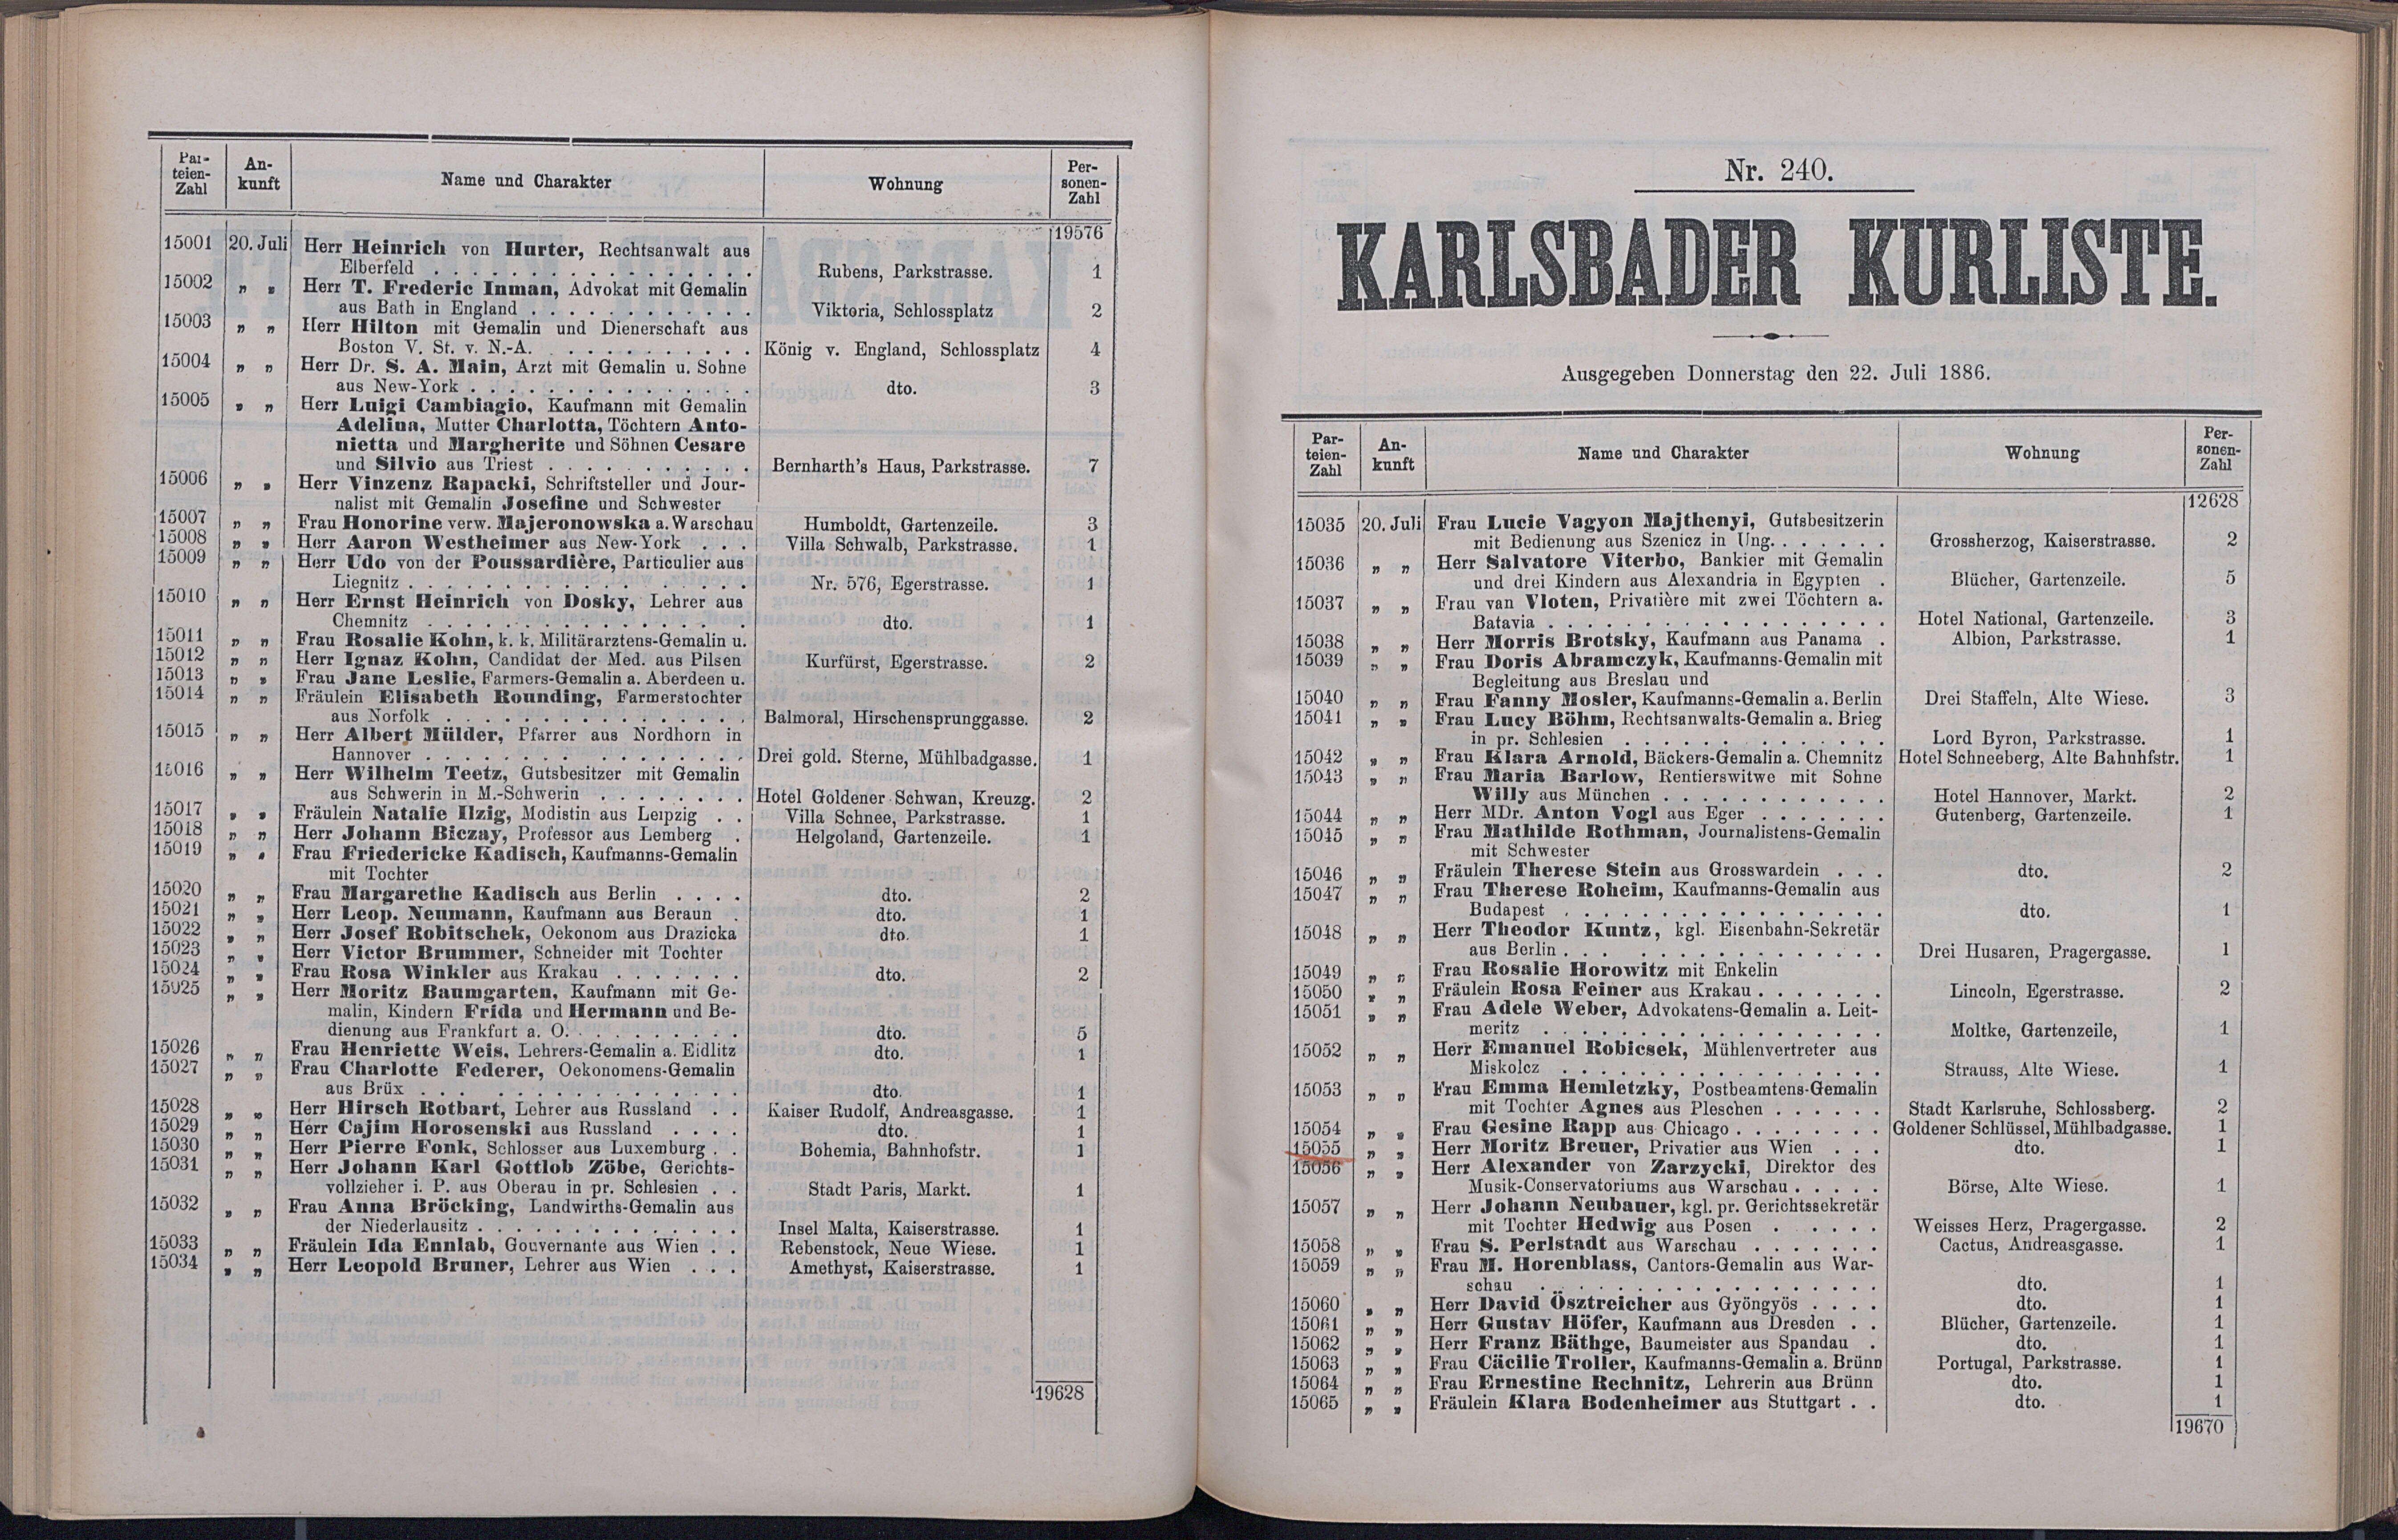 294. soap-kv_knihovna_karlsbader-kurliste-1886_2950